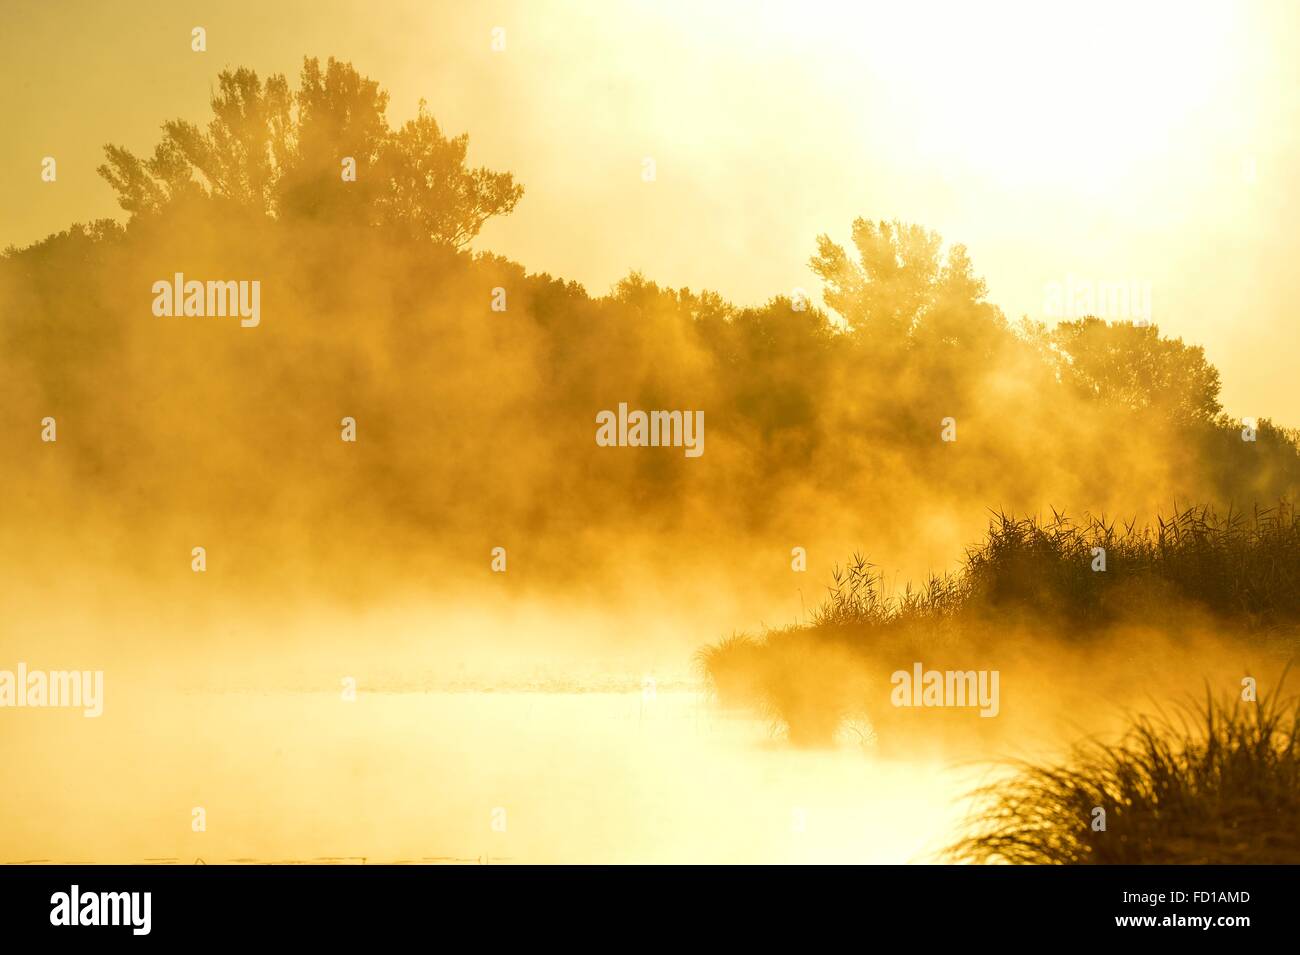 Bank with trees and reeds, luminous backlit mist, morning light, Schönau an der Donau, Lower Austria, Austria Stock Photo